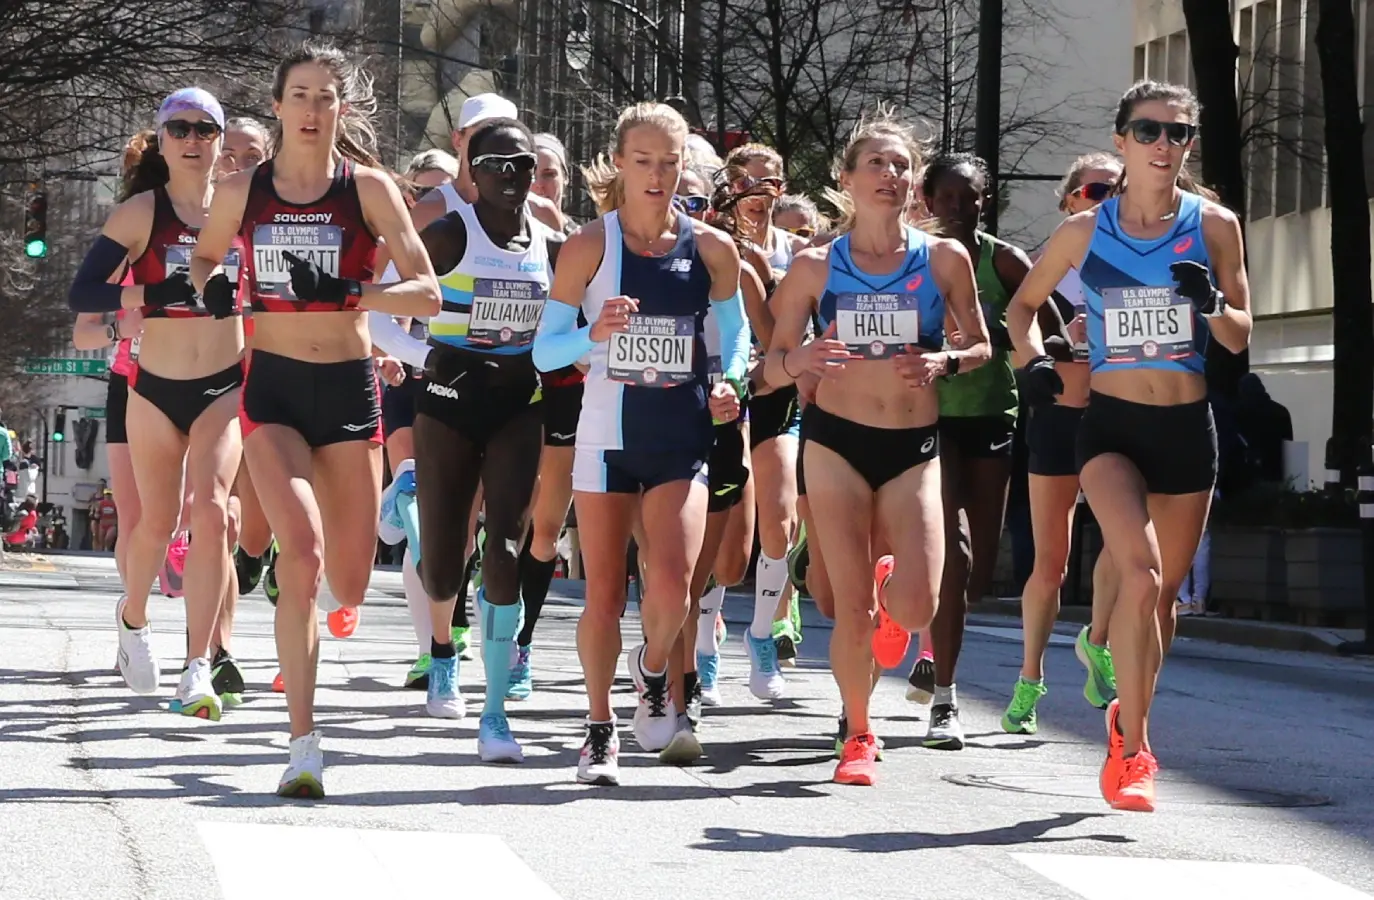 RRW: Opinion – The Trials Already Have A Winner: USA Women’s Marathoning